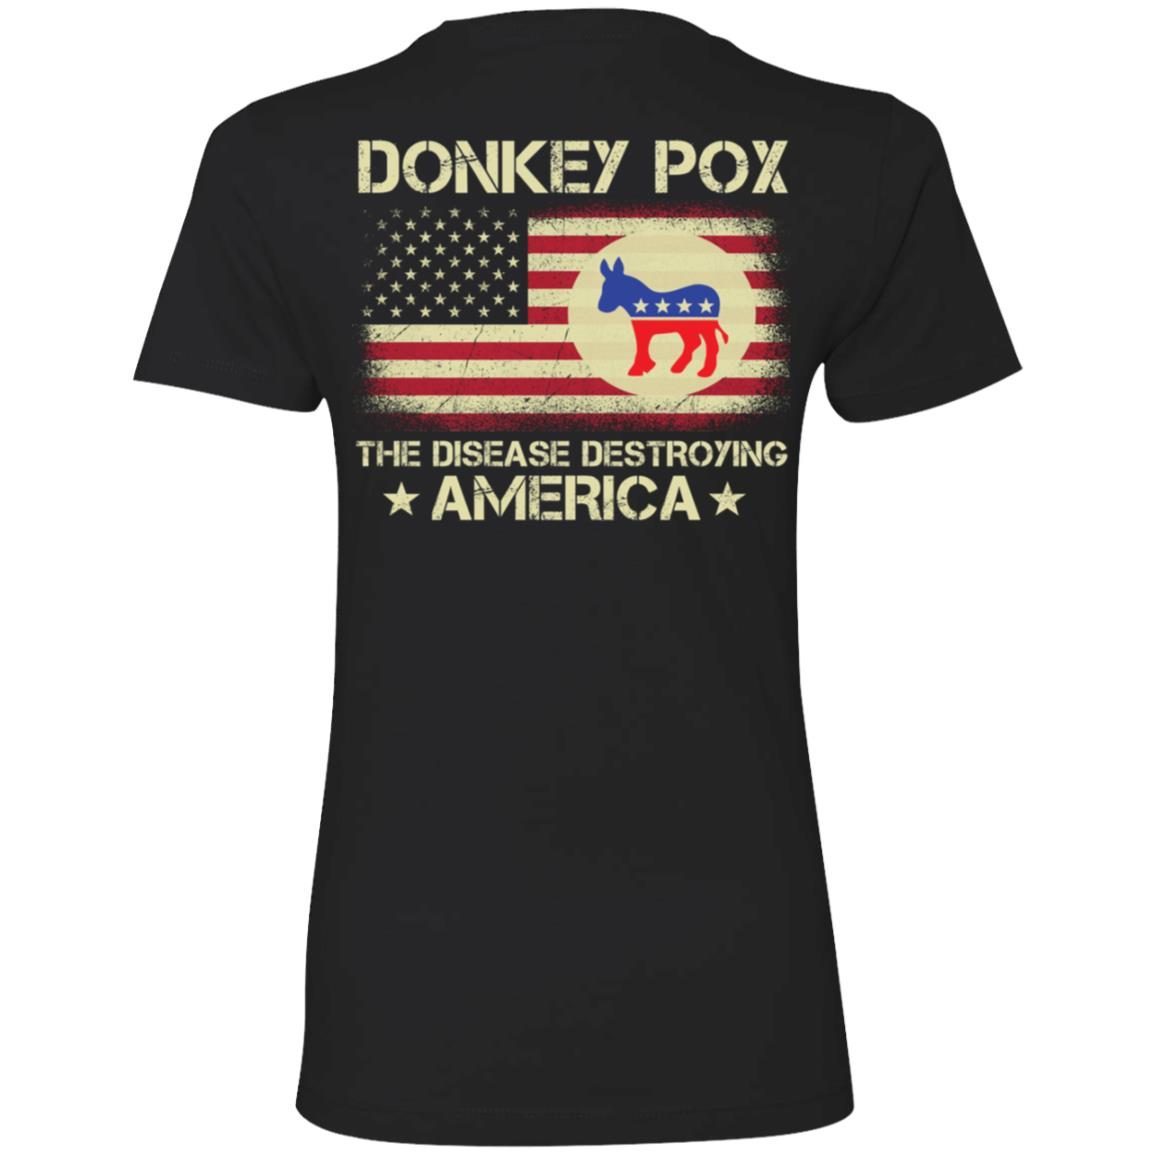 Donkey Pox The Disease Destroying America shirt